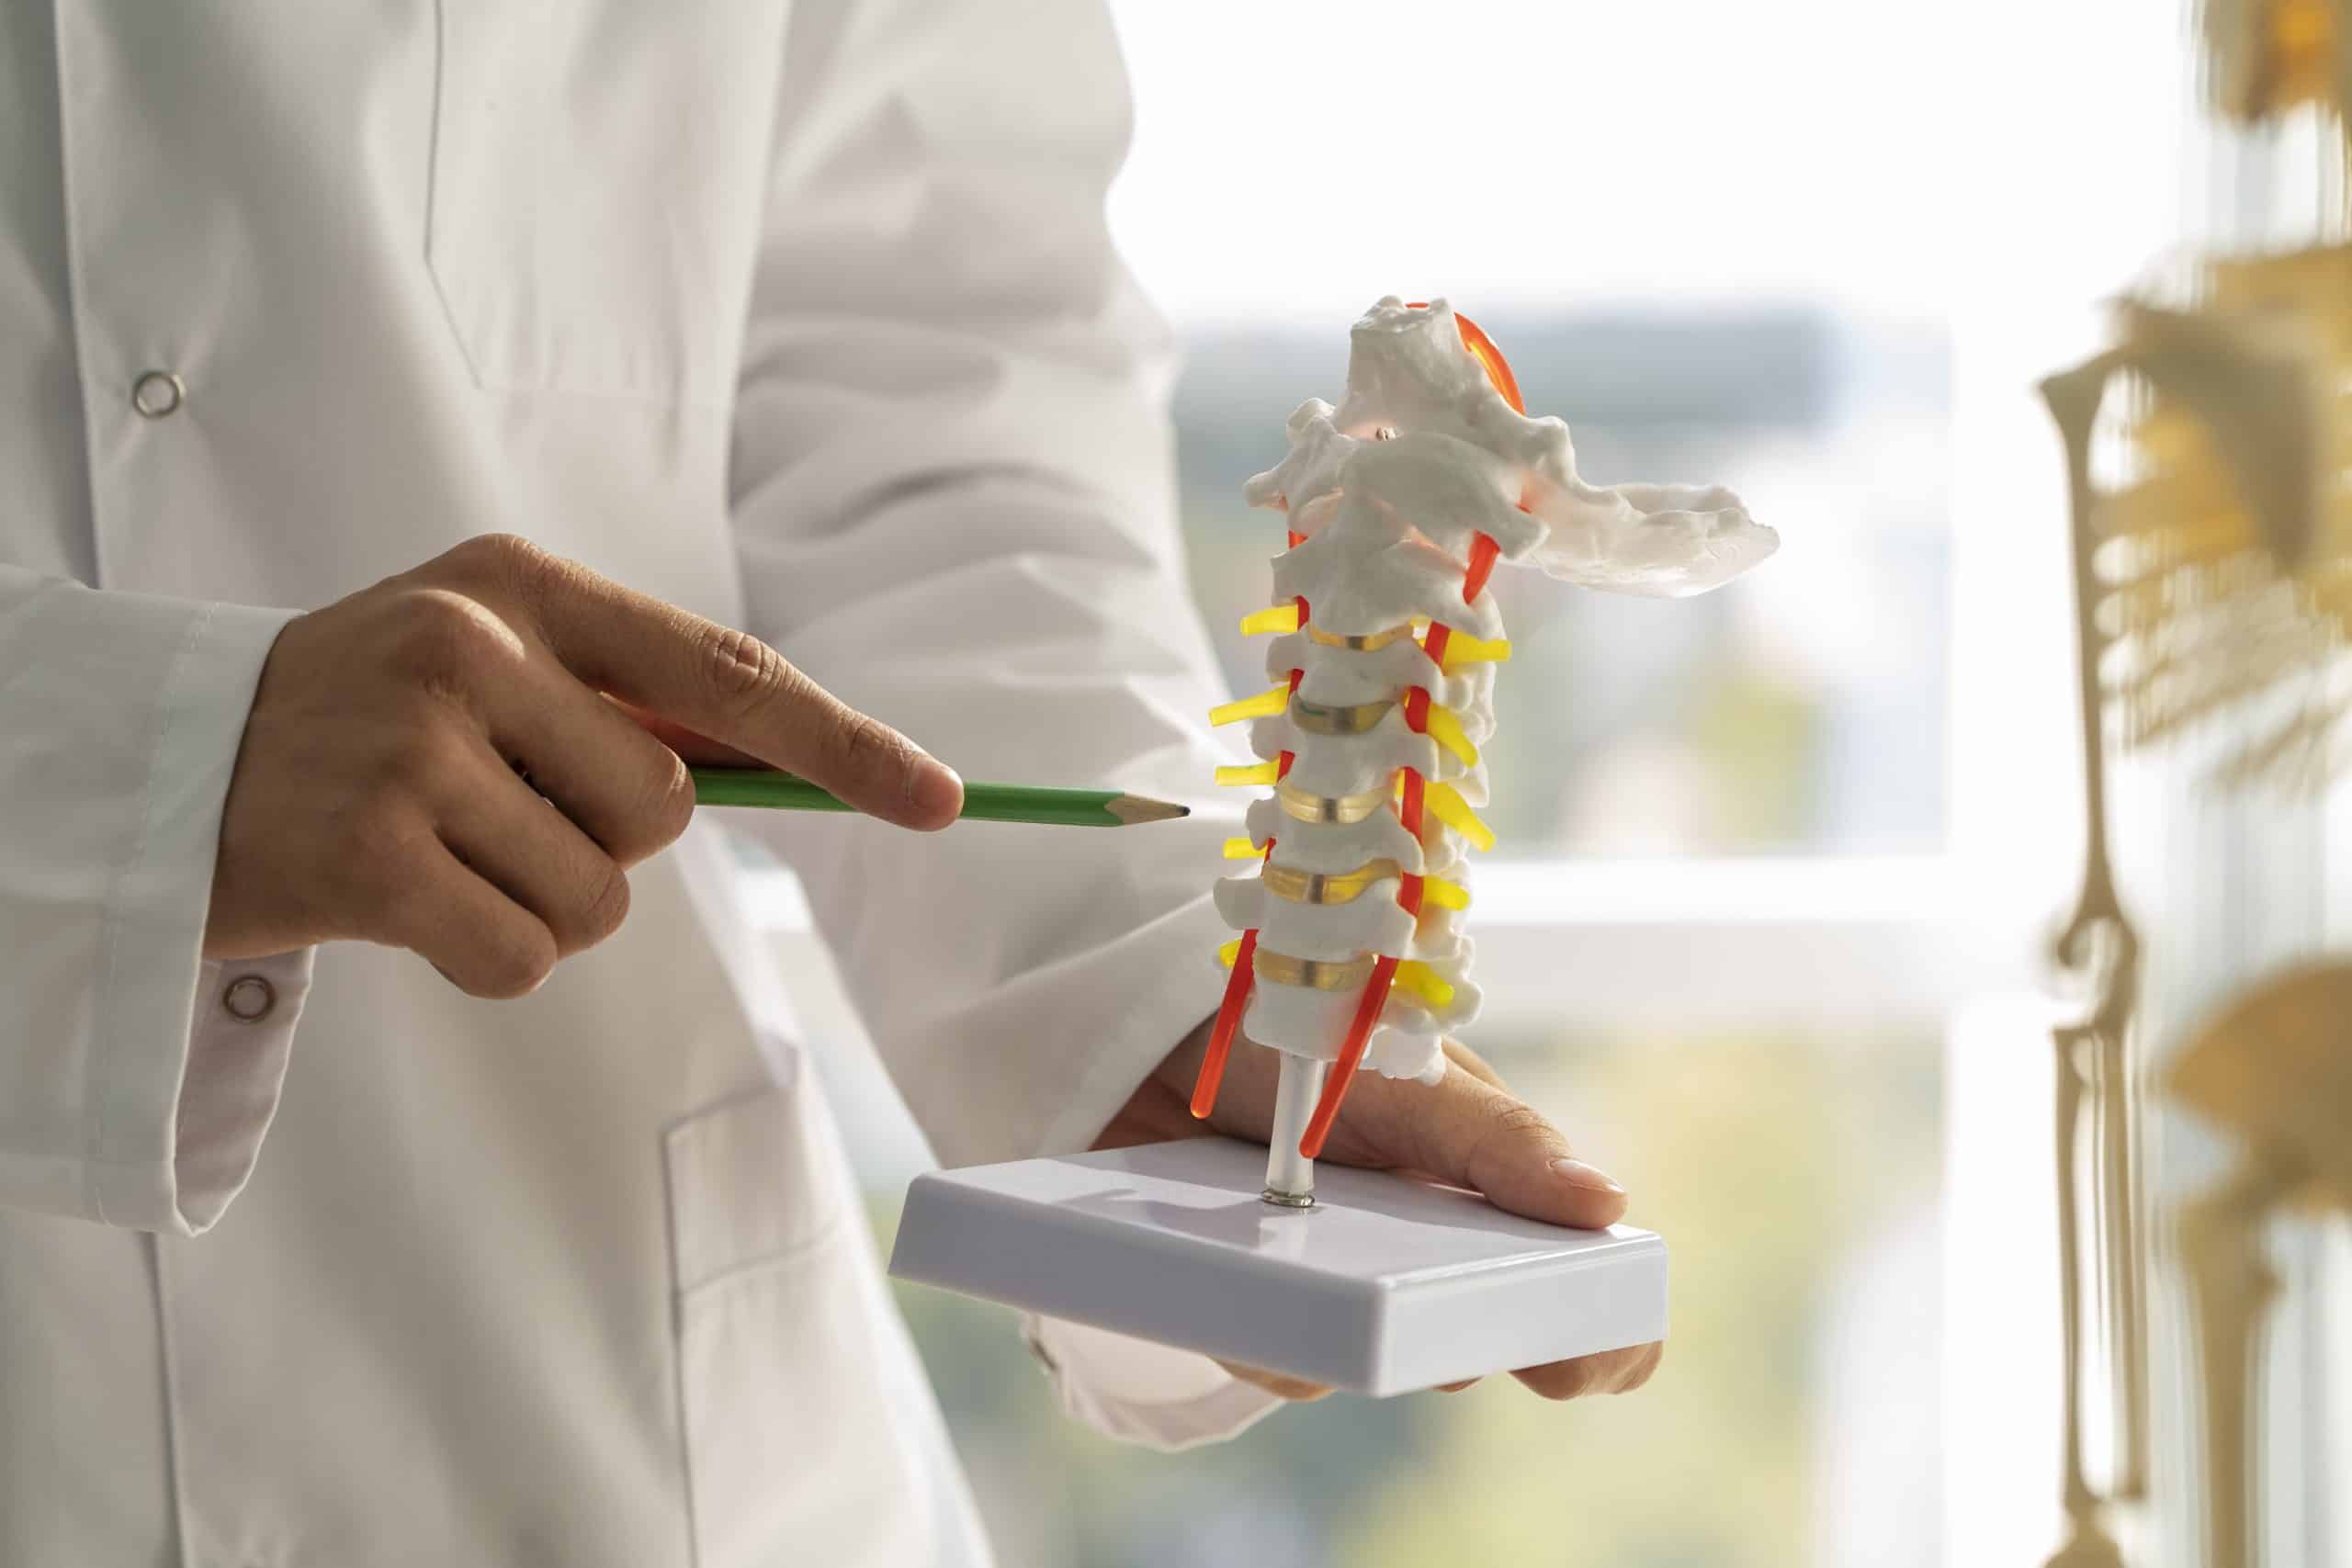 Spinal cord Injury